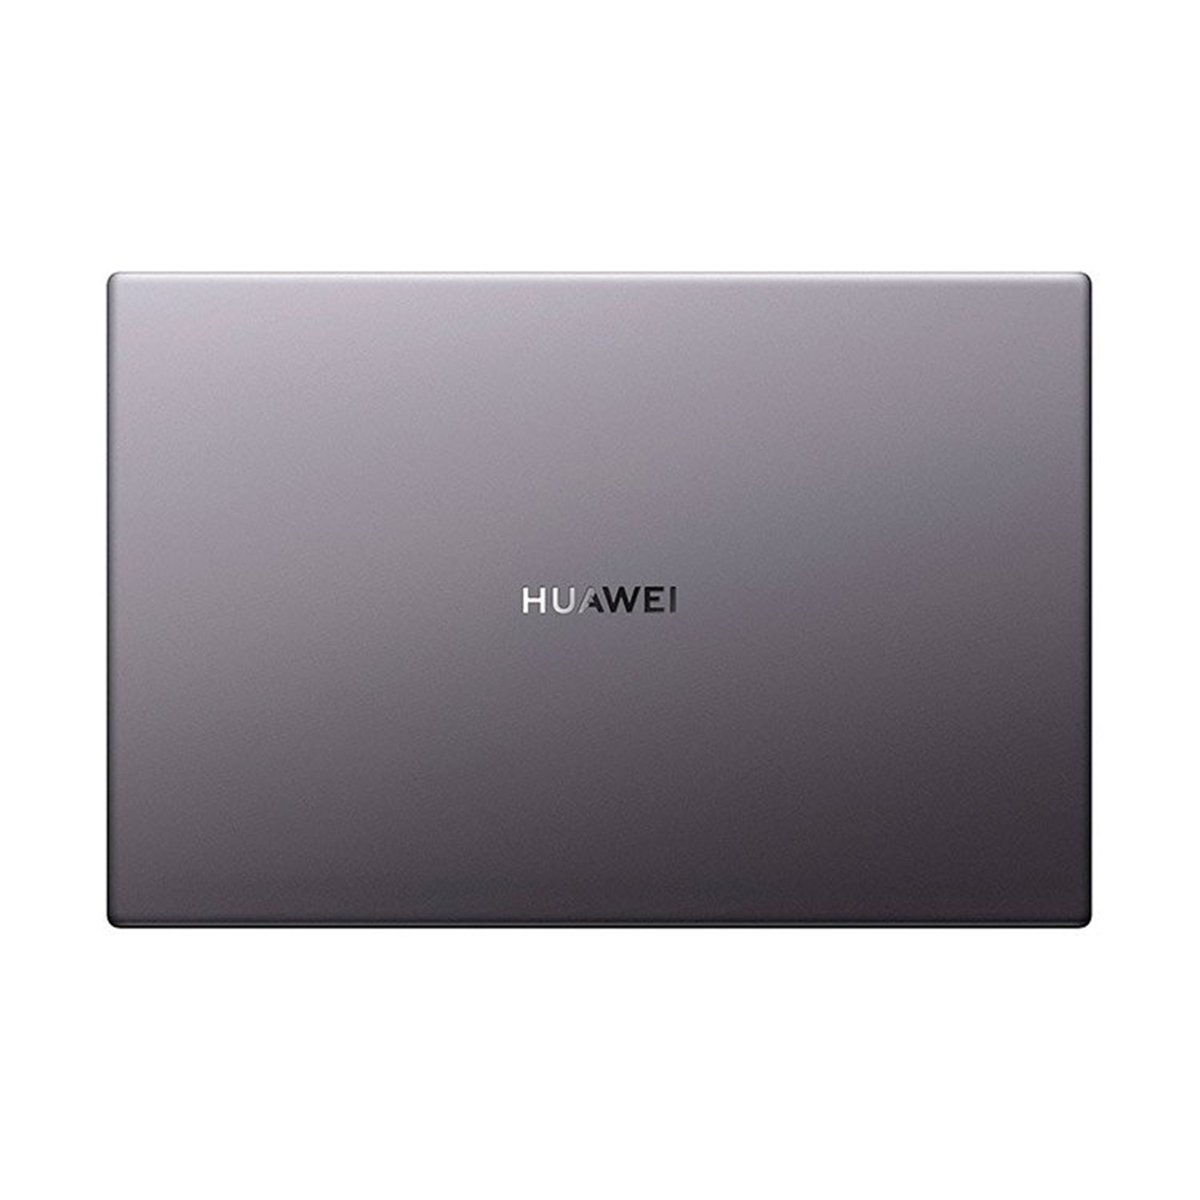 Huawei Matebook D14-NOBELB-WAH9E Intel Core i5 Processor,8GB RAM,512GB SSD,Integrated Graphics,14.0" FHD,Windows 10